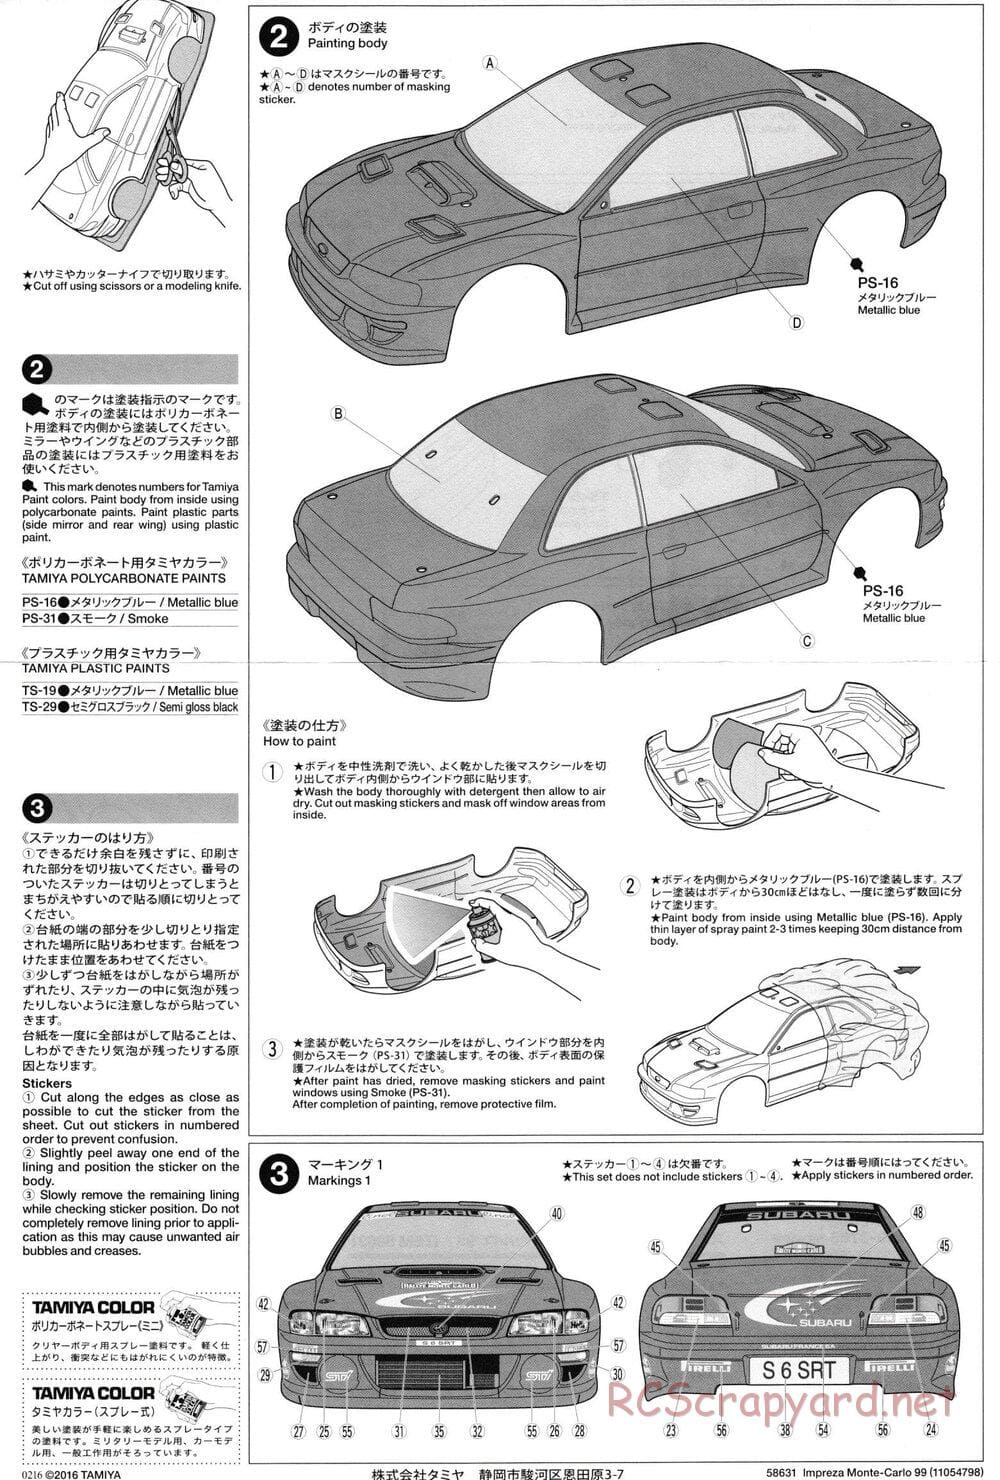 Tamiya - Subaru Impreza Monte-Carlo 99 - TT-02 Chassis - Body Manual - Page 2